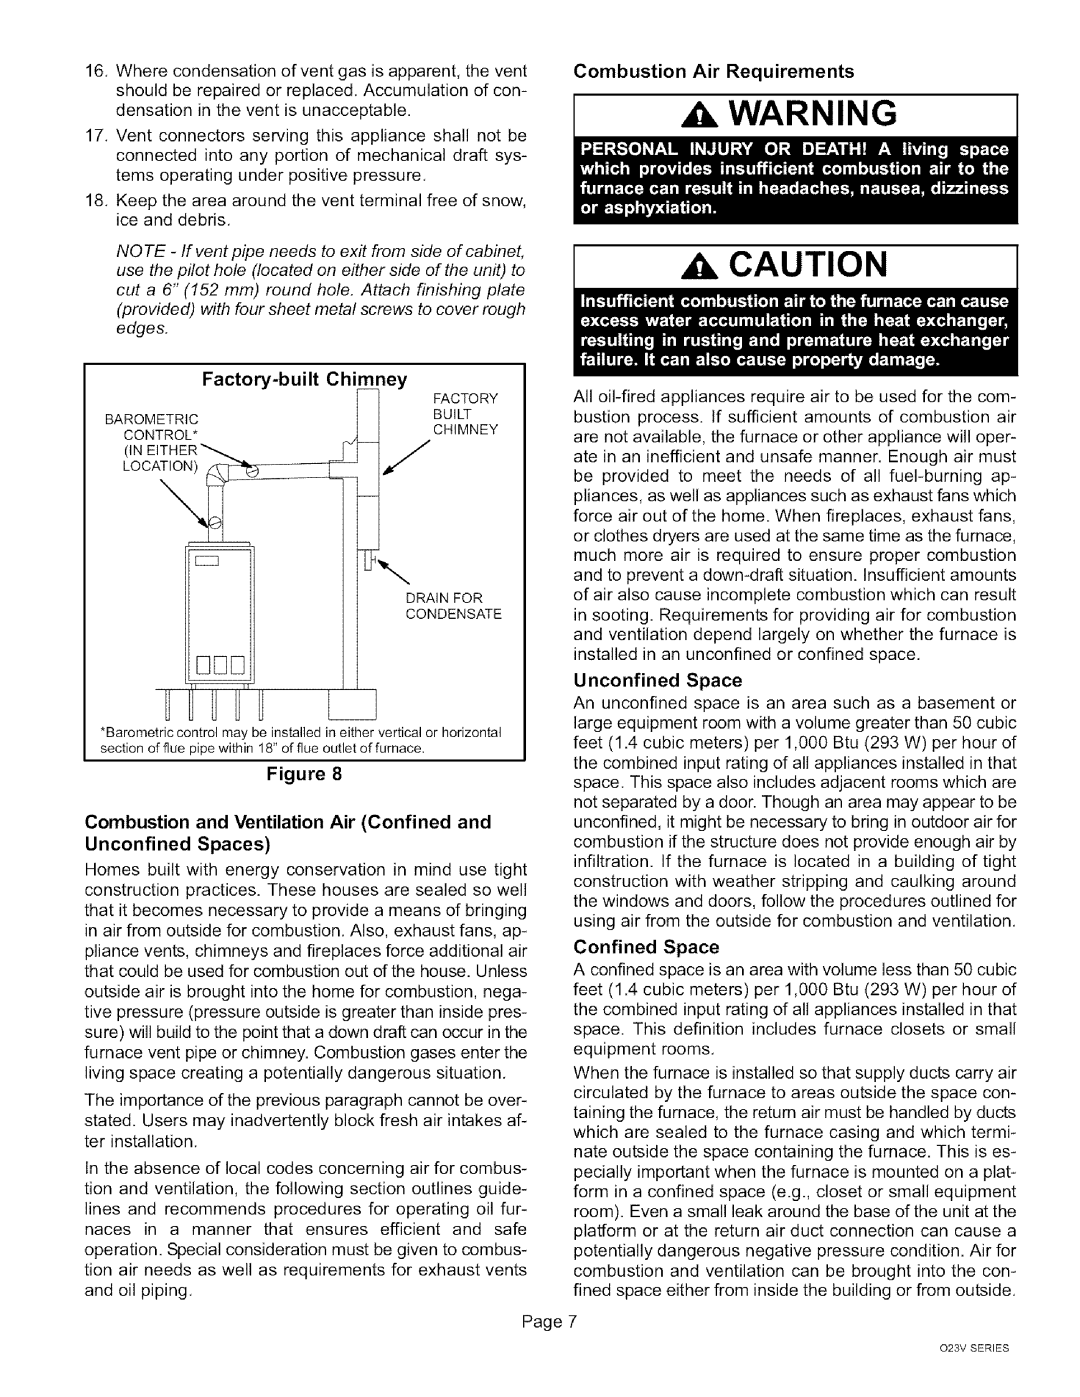 Lennox International Inc O23V3-120 Uf U Lj, Wherecondensationofventgasisapparent,thevent, Combustion Air Requirements 